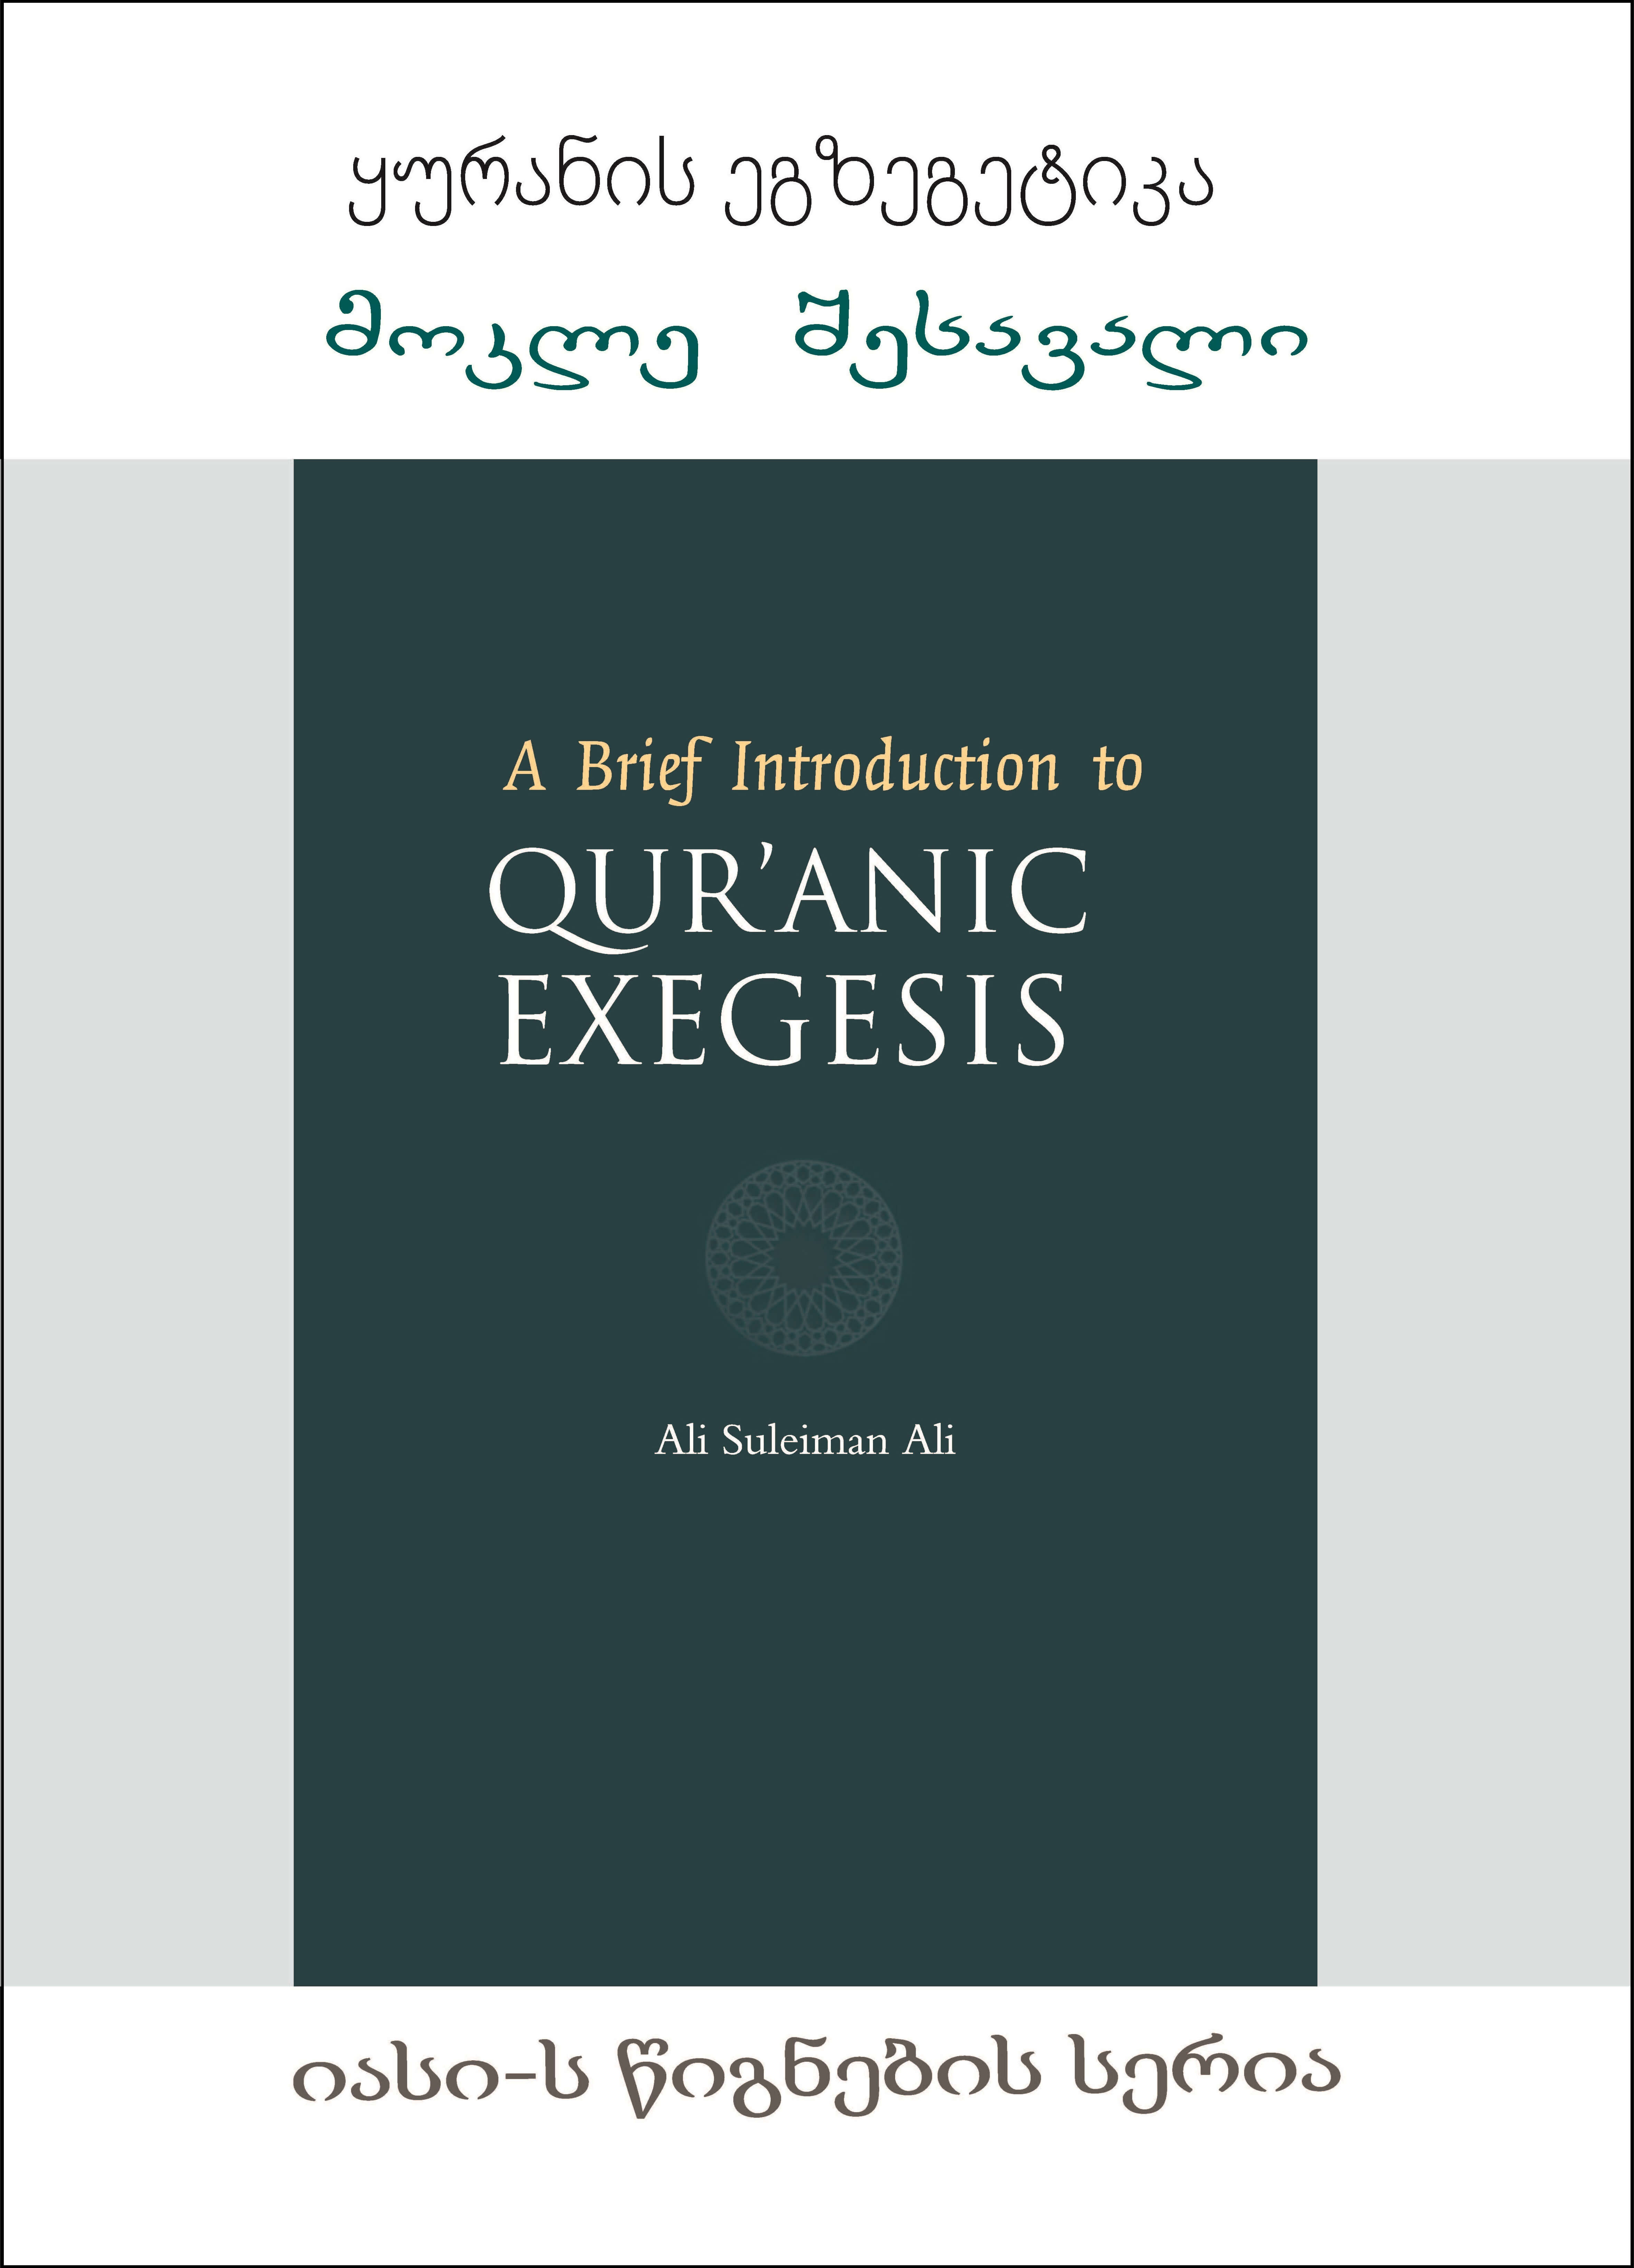 Georgian: yuranis egzegetika mokle Sesavali (Book-in-Brief: A Brief Introduction to Qur’anic Exegesis)